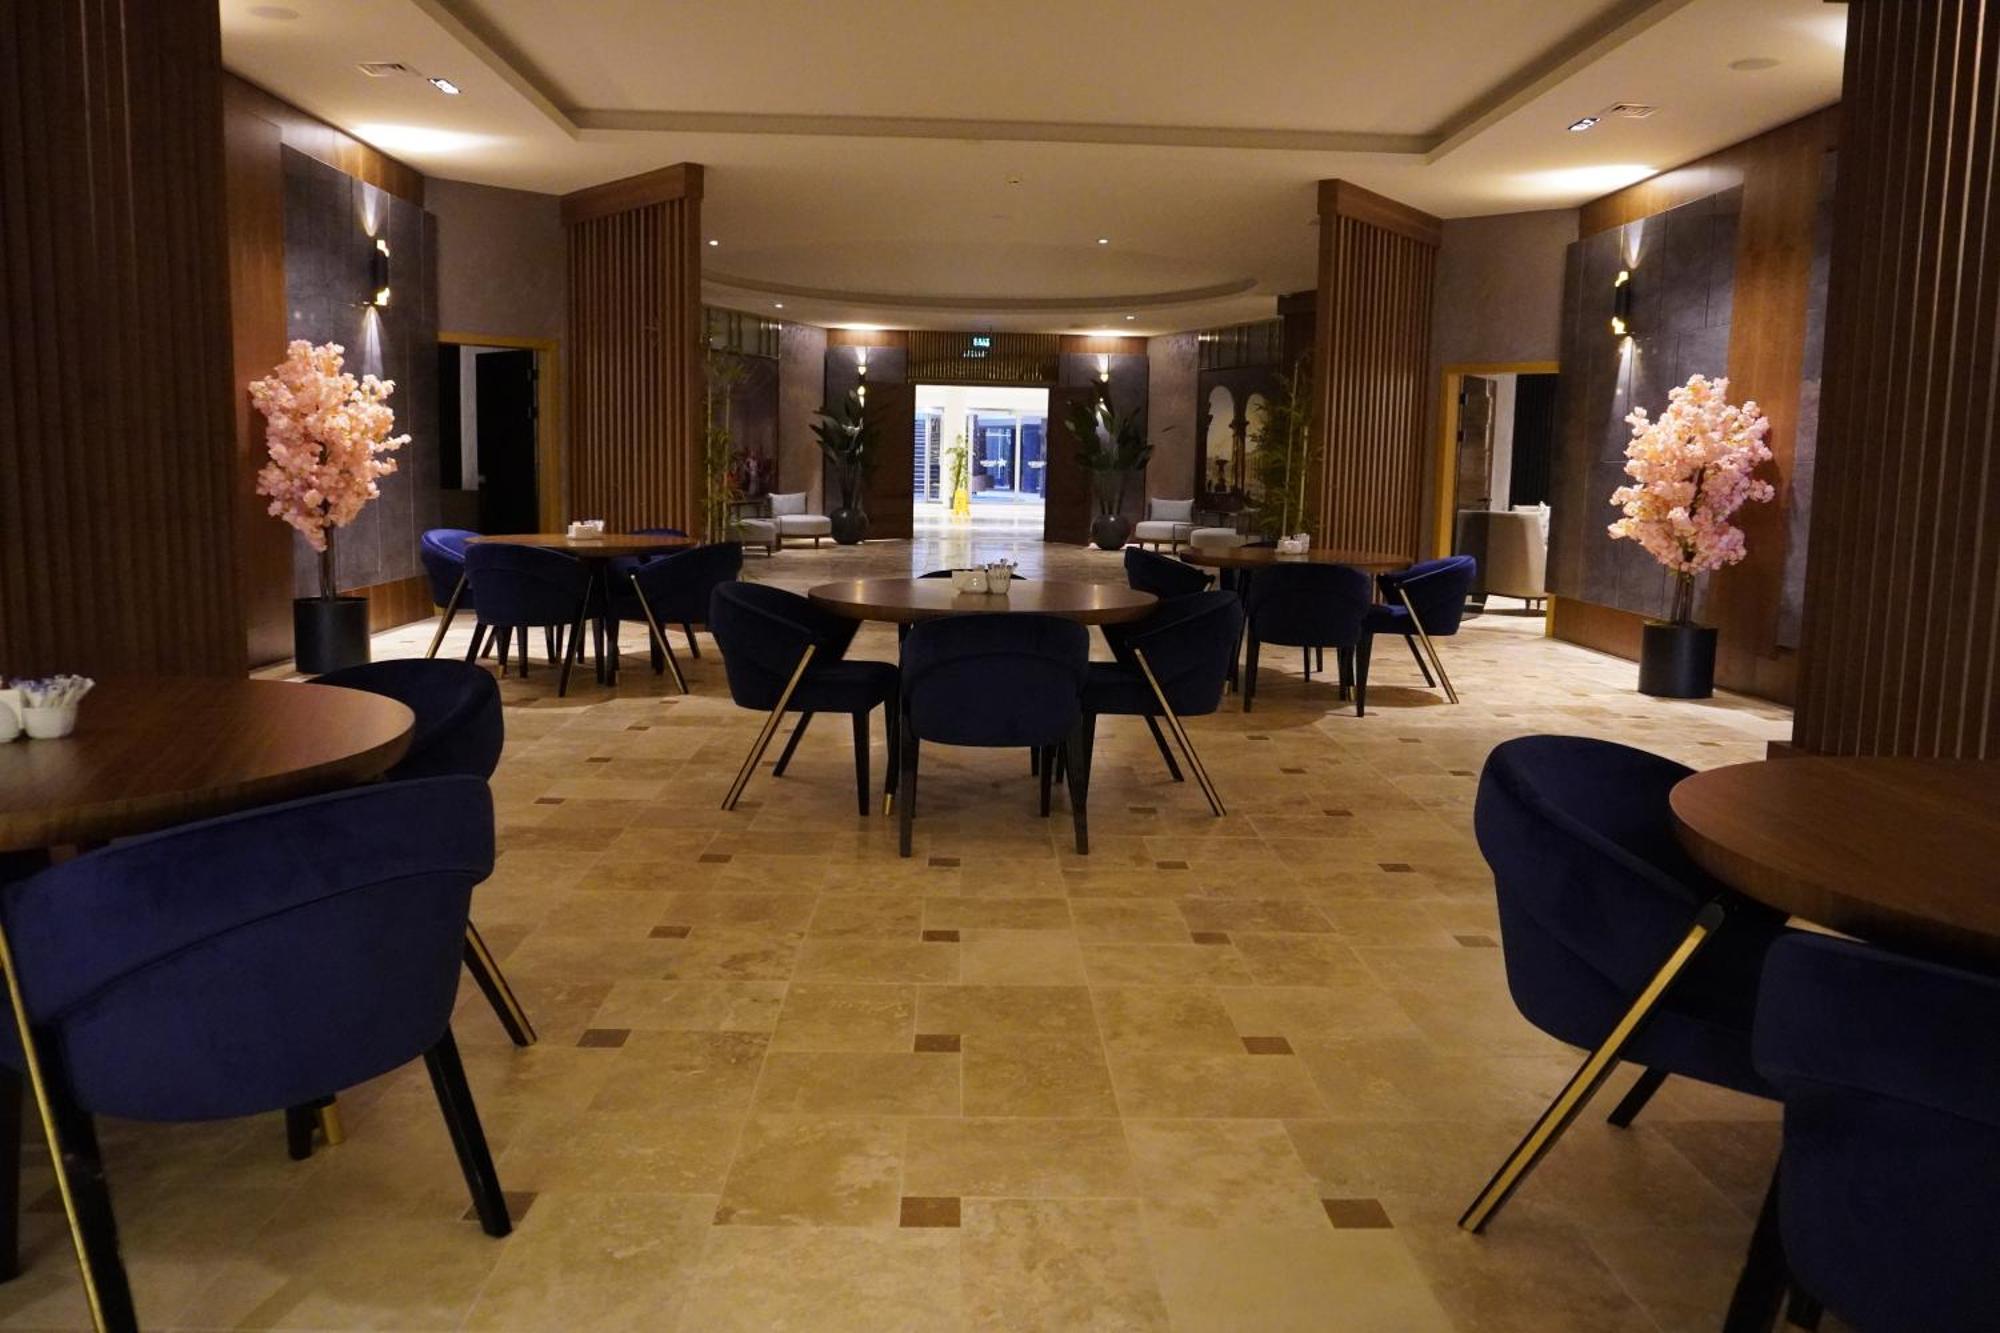 Anadolu Hotels Esenboga Thermal Exterior foto